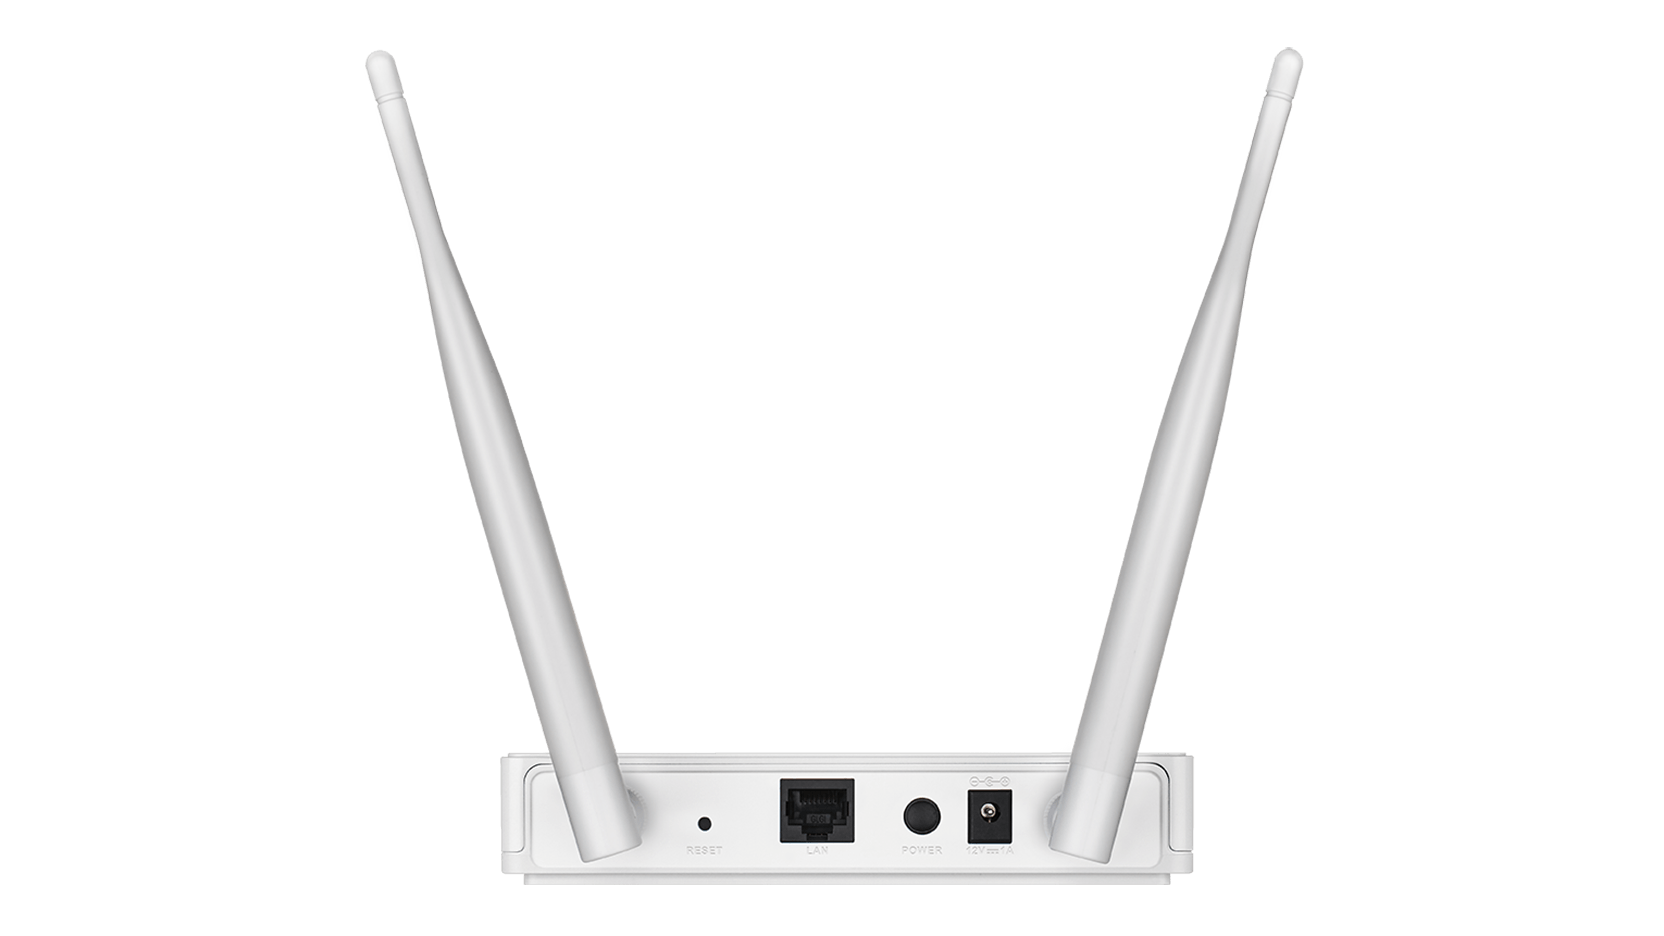 Standard Performance financial DAP-1665 Wireless AC1200 Wave 2 Dual-Band Access Point | D-Link UK